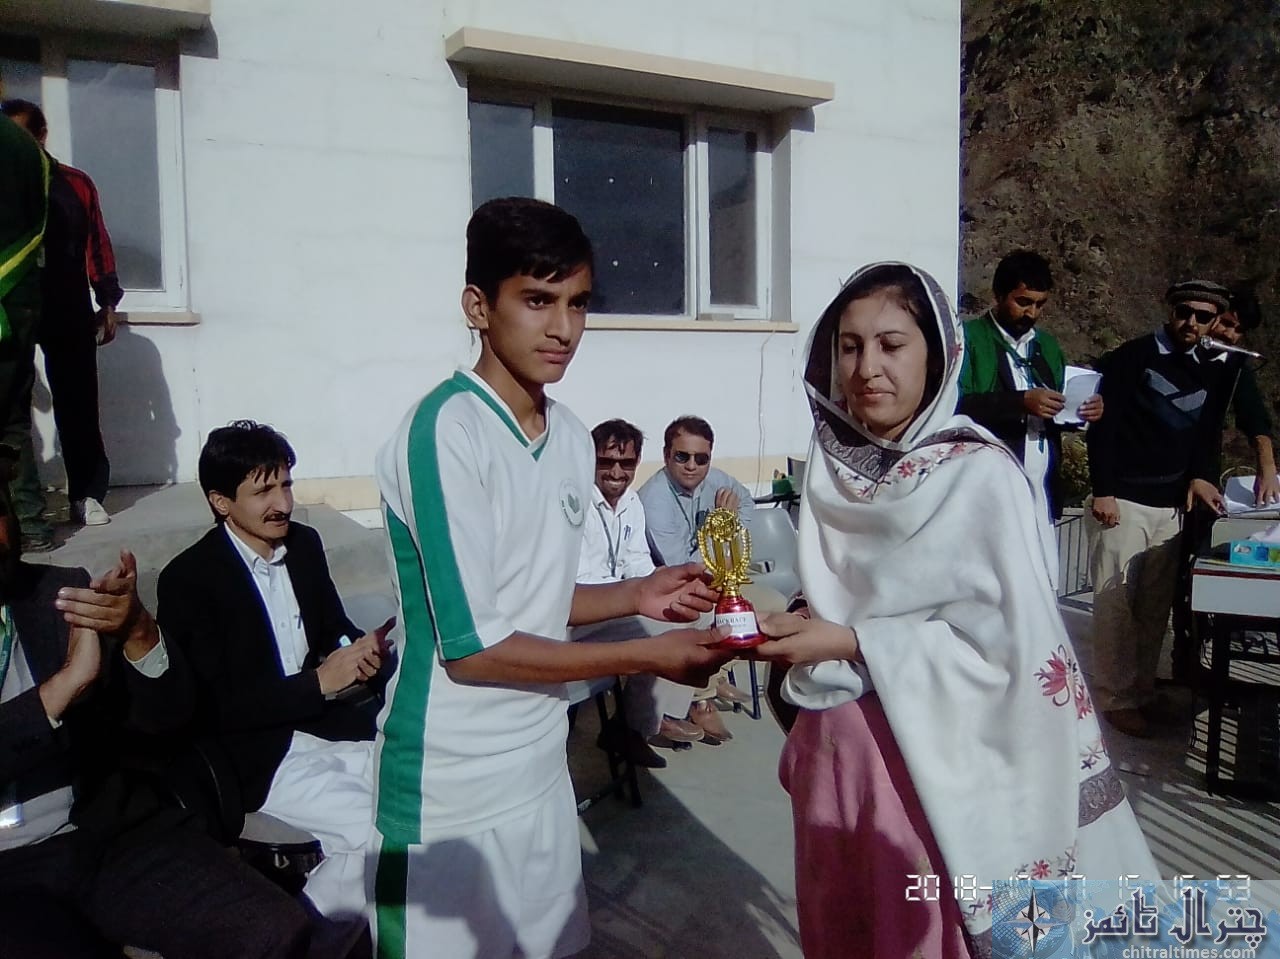 aga khan school sports gala concluded 4